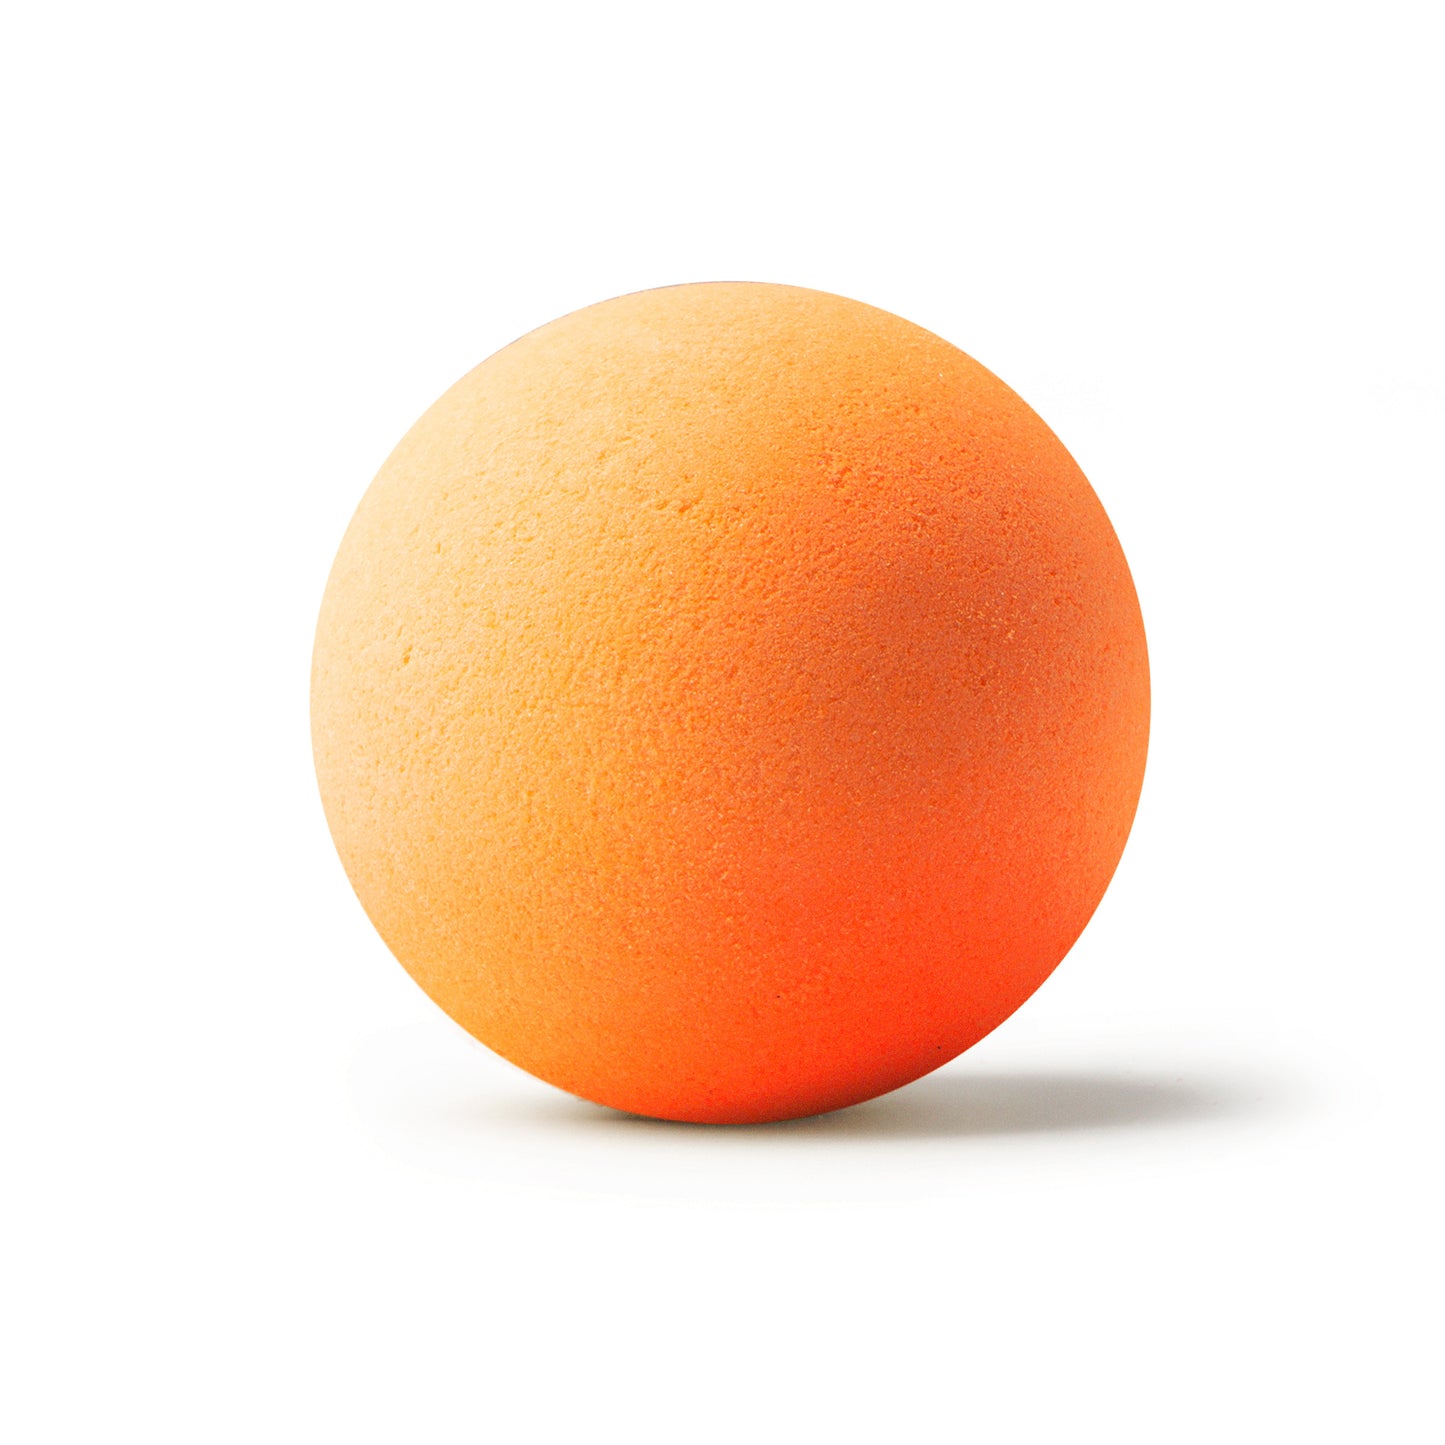 an orange bath bomb with shadow